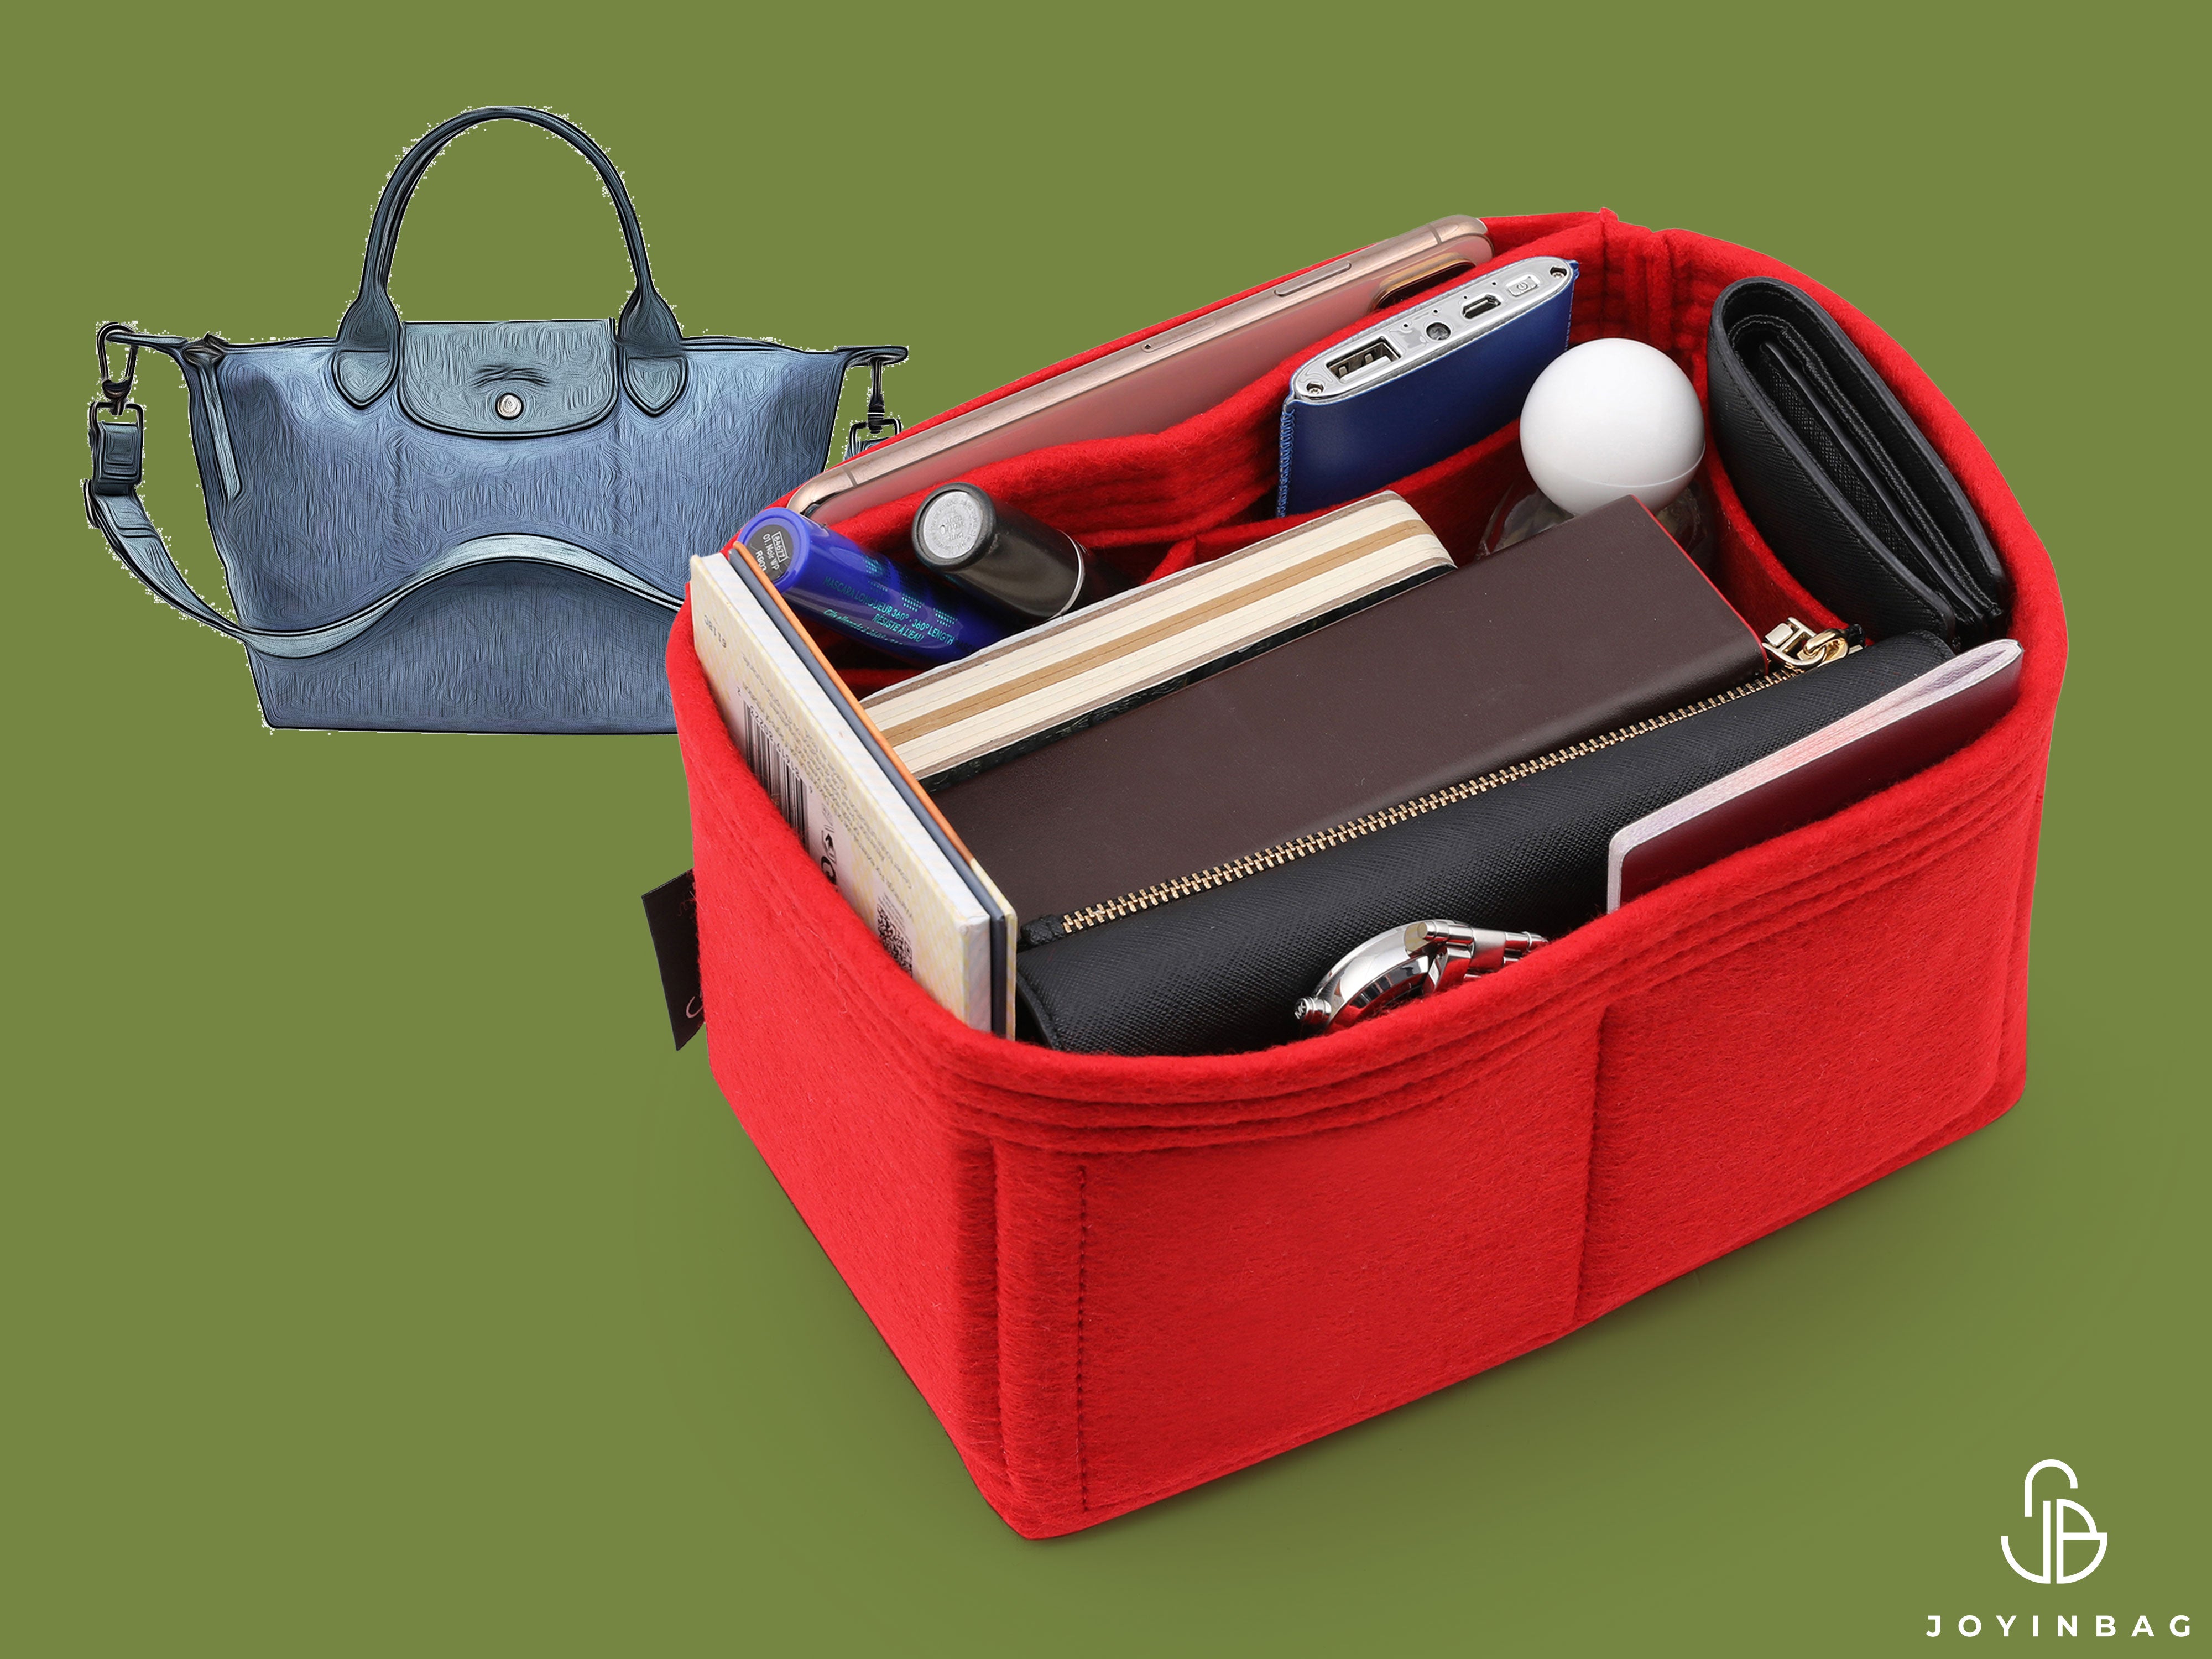 Purse Organizer Insert for Longchamp Le Pliage Neo(Large) Handbags